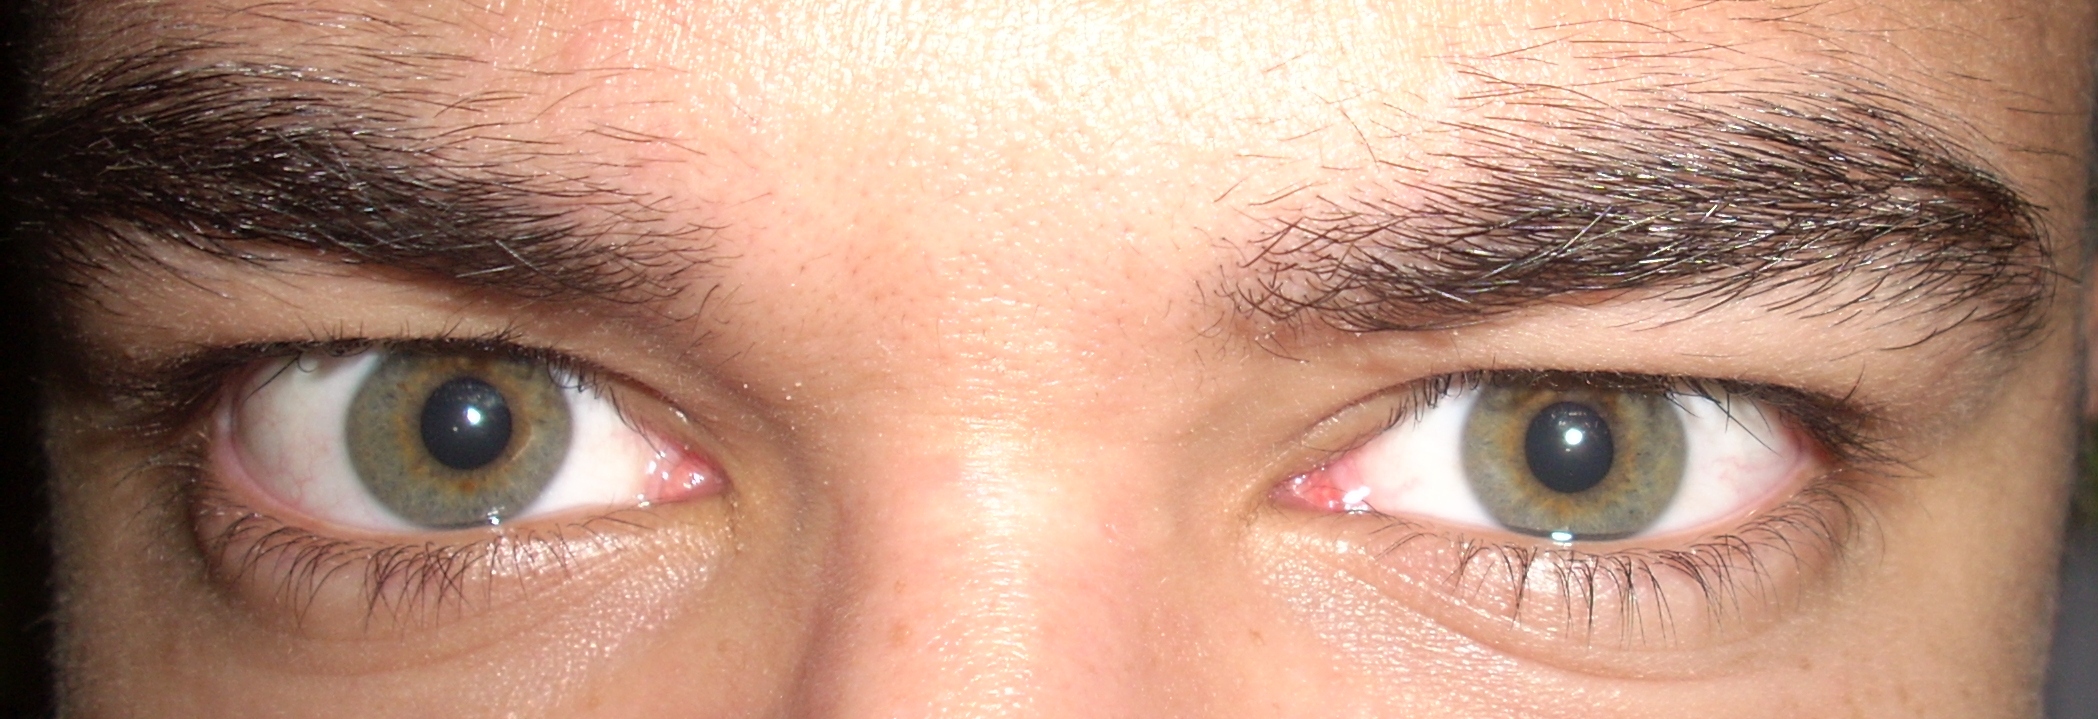 зеленые глаза у мужчин фото